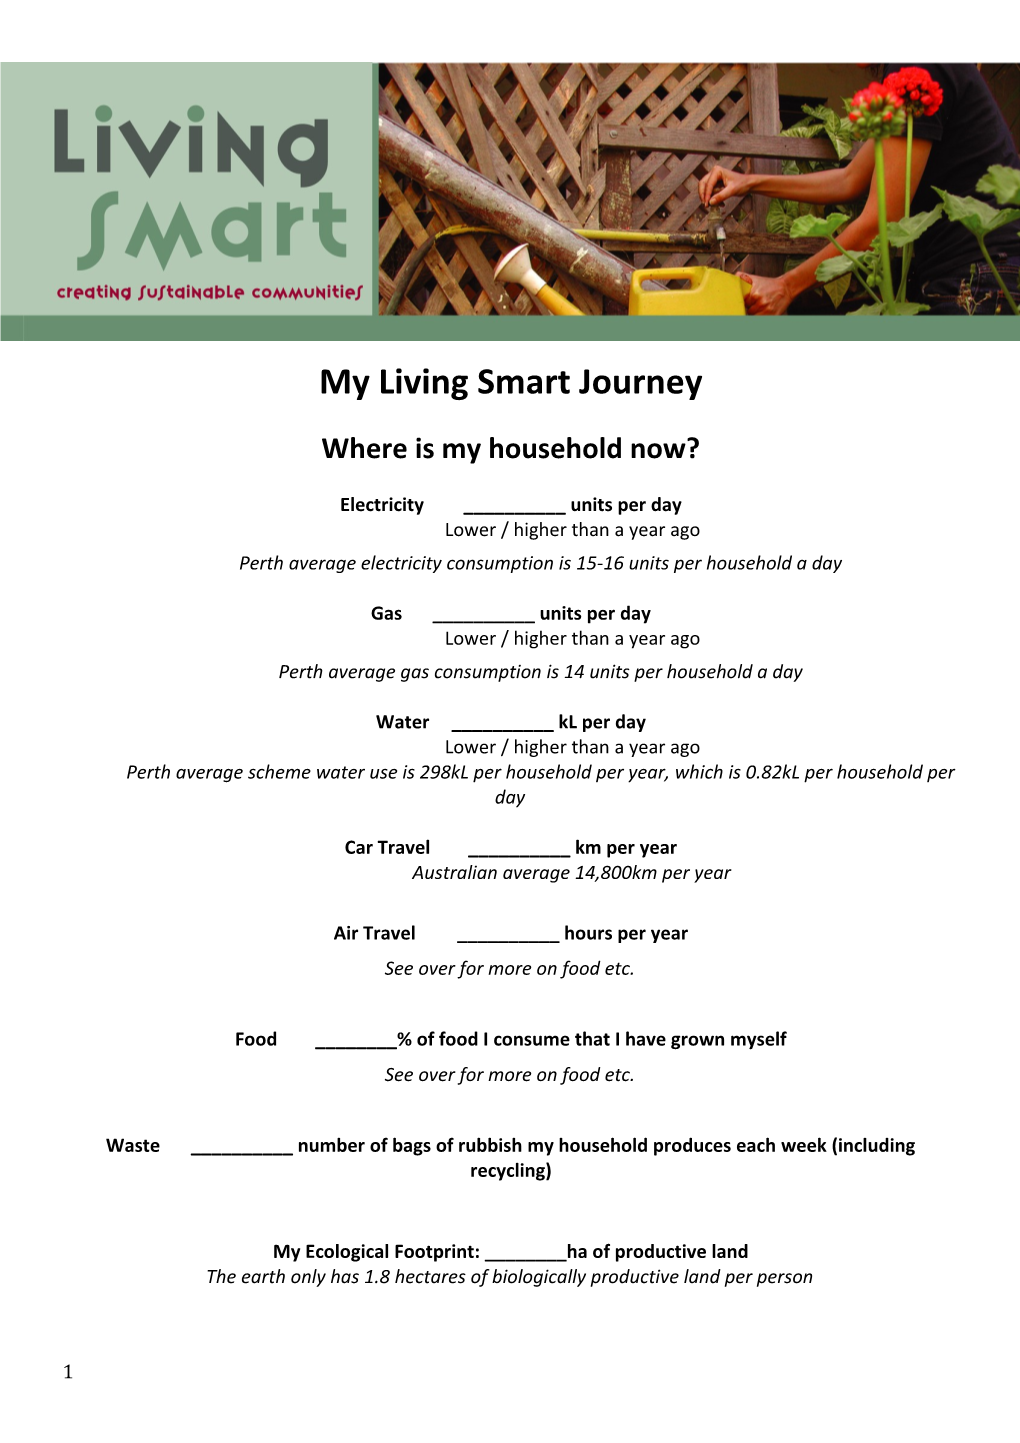 My Living Smart Journey